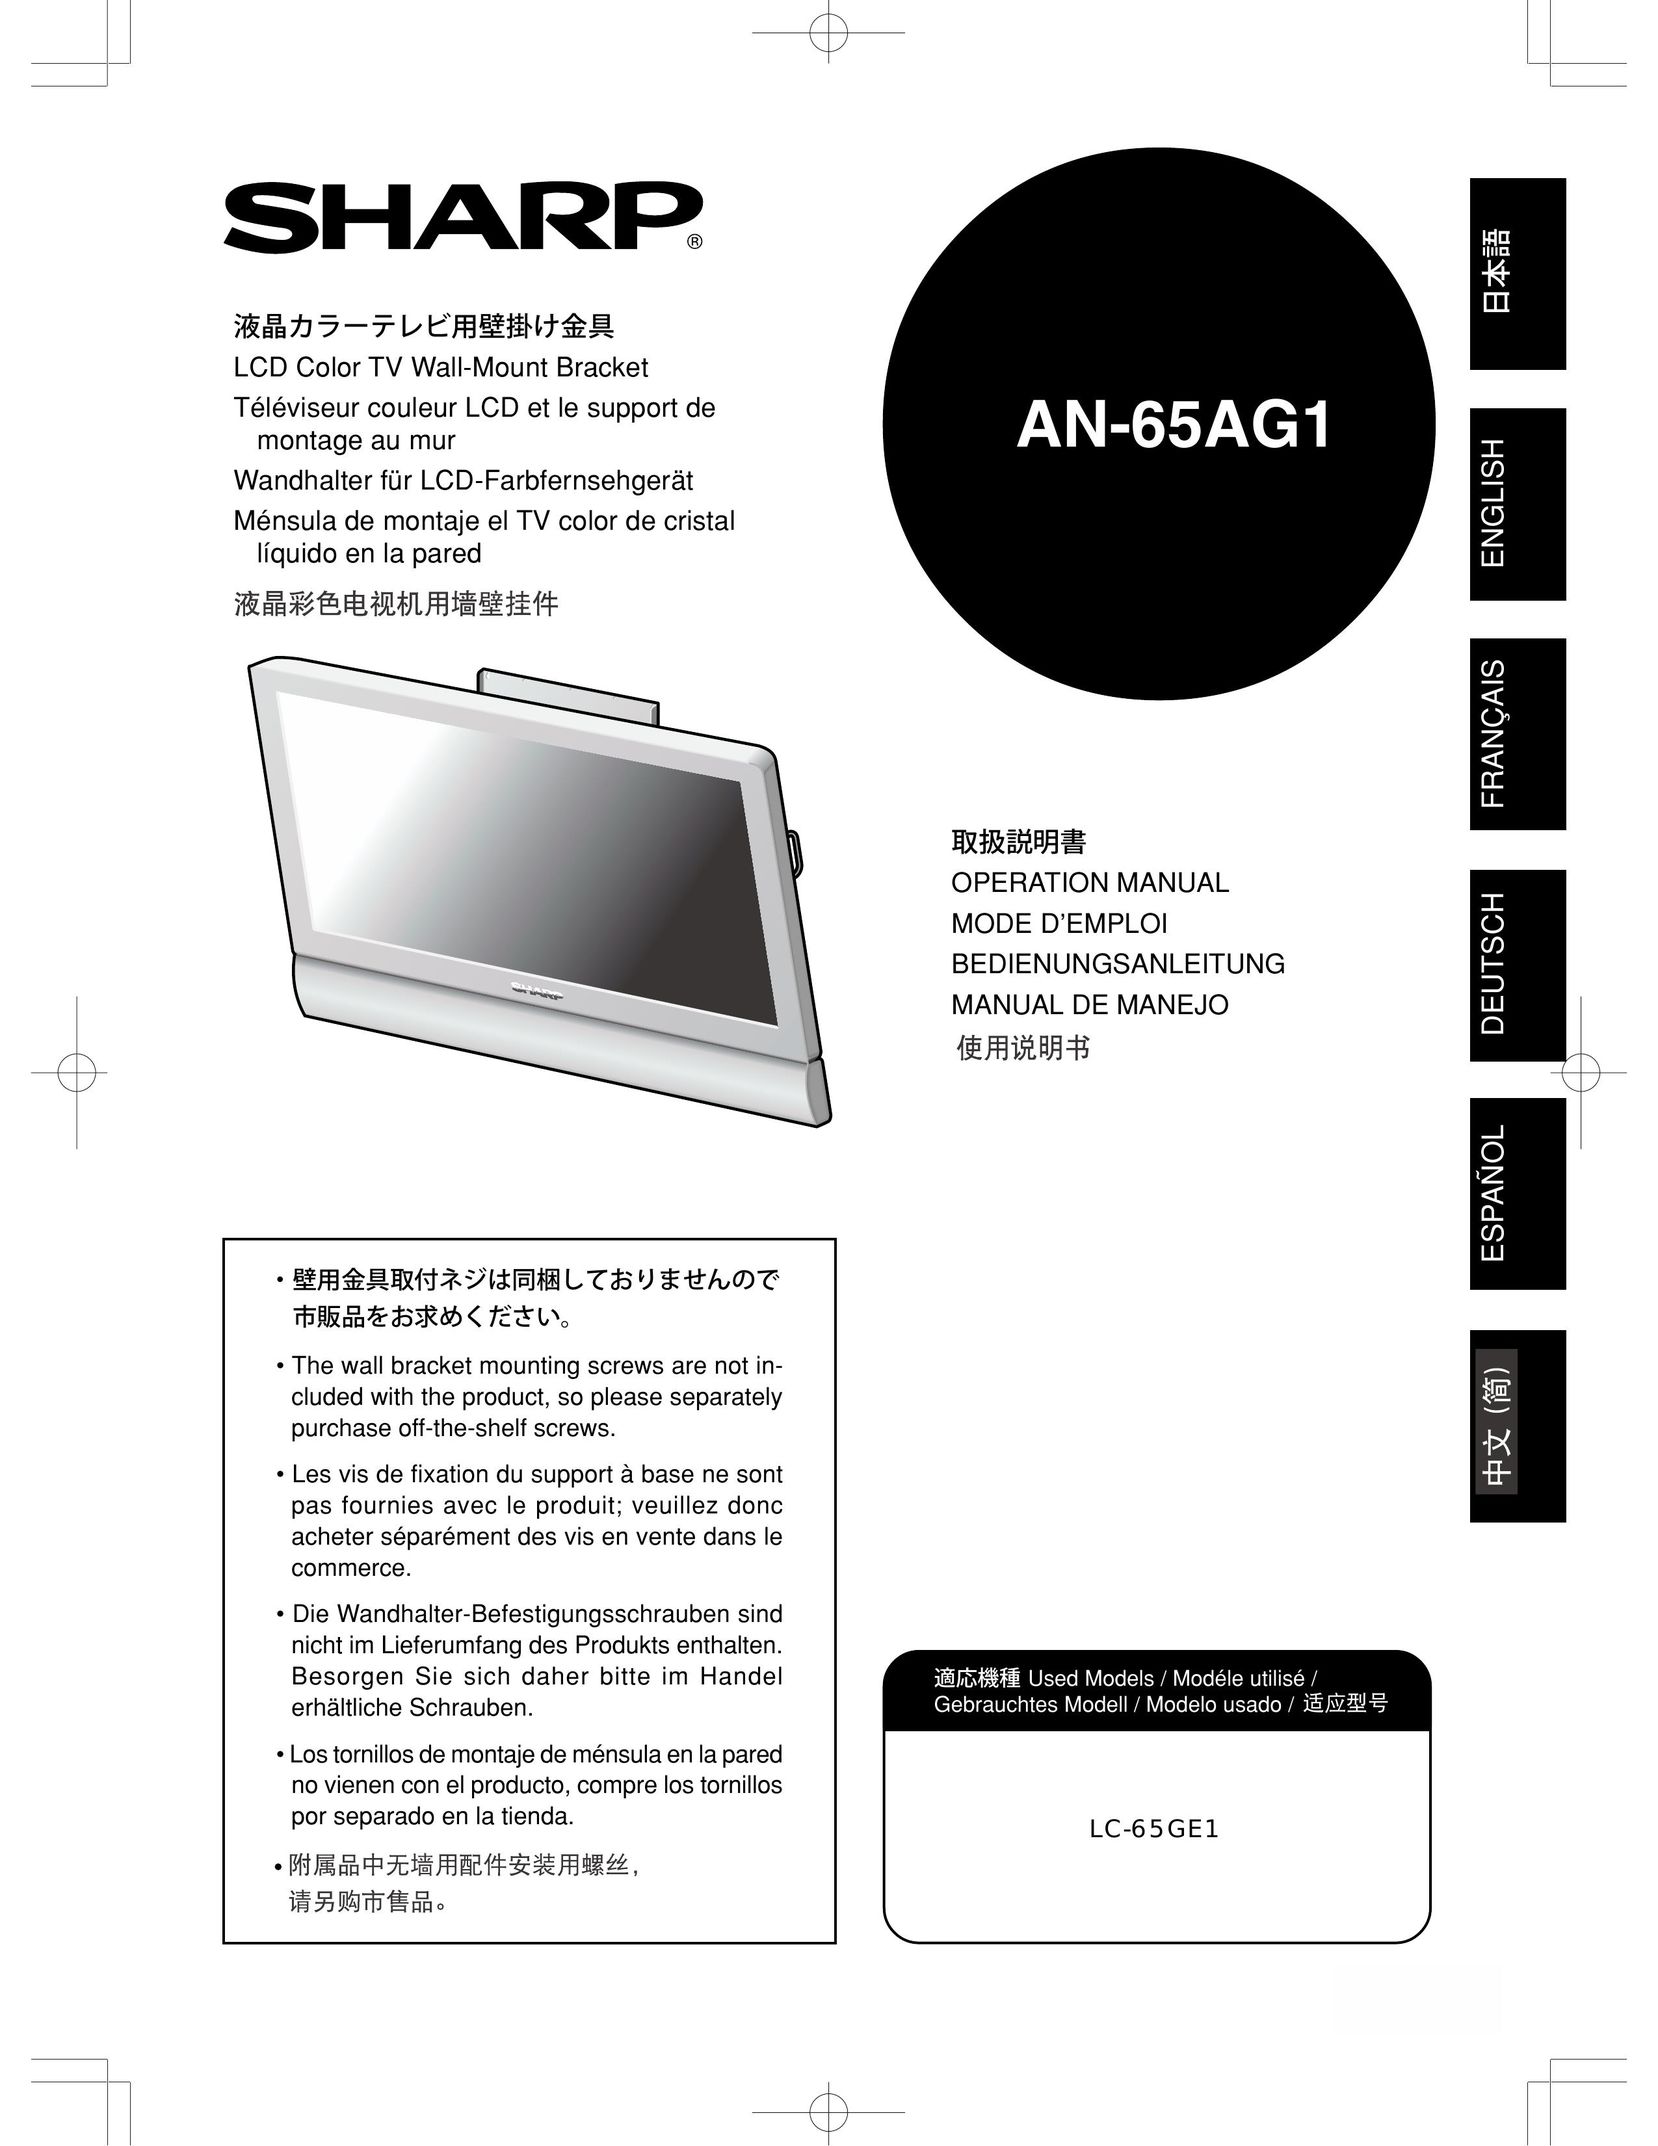 Sharp AN-65AG1 Indoor Furnishings User Manual